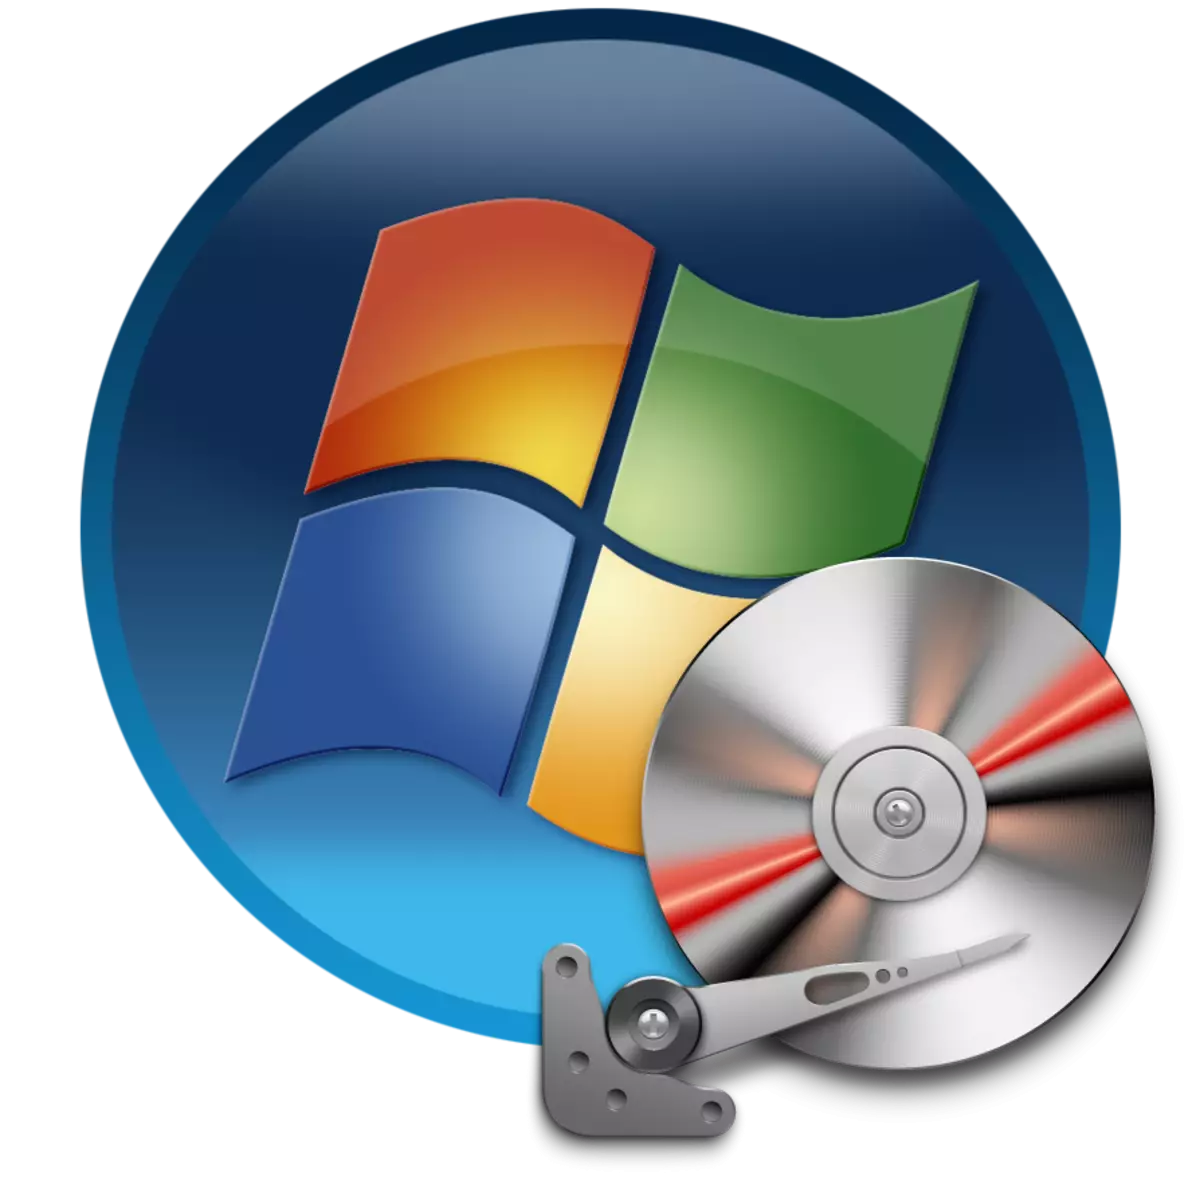 Disk Management in Windows 7